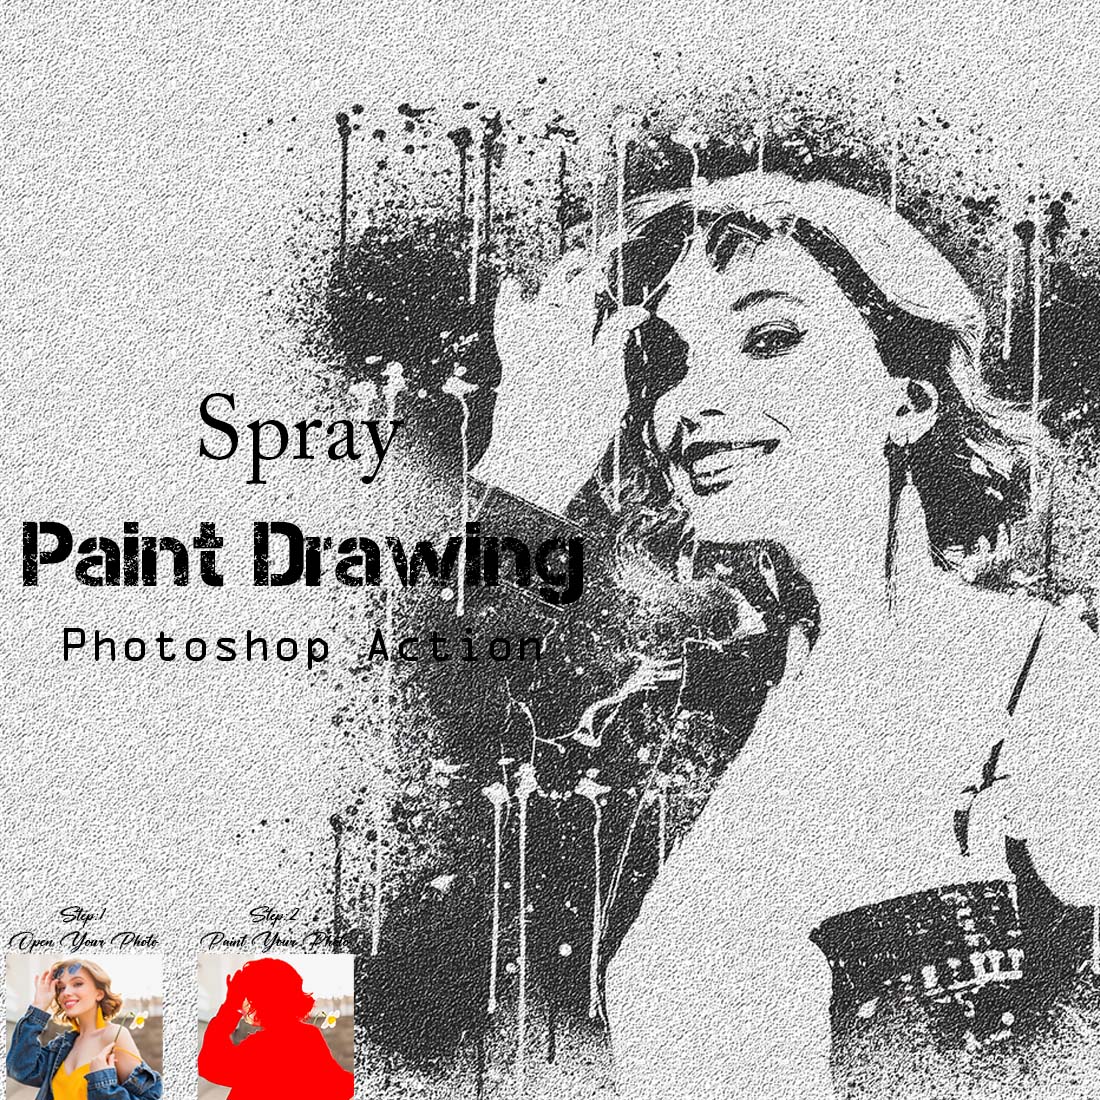 Spray Paint Photoshop Action